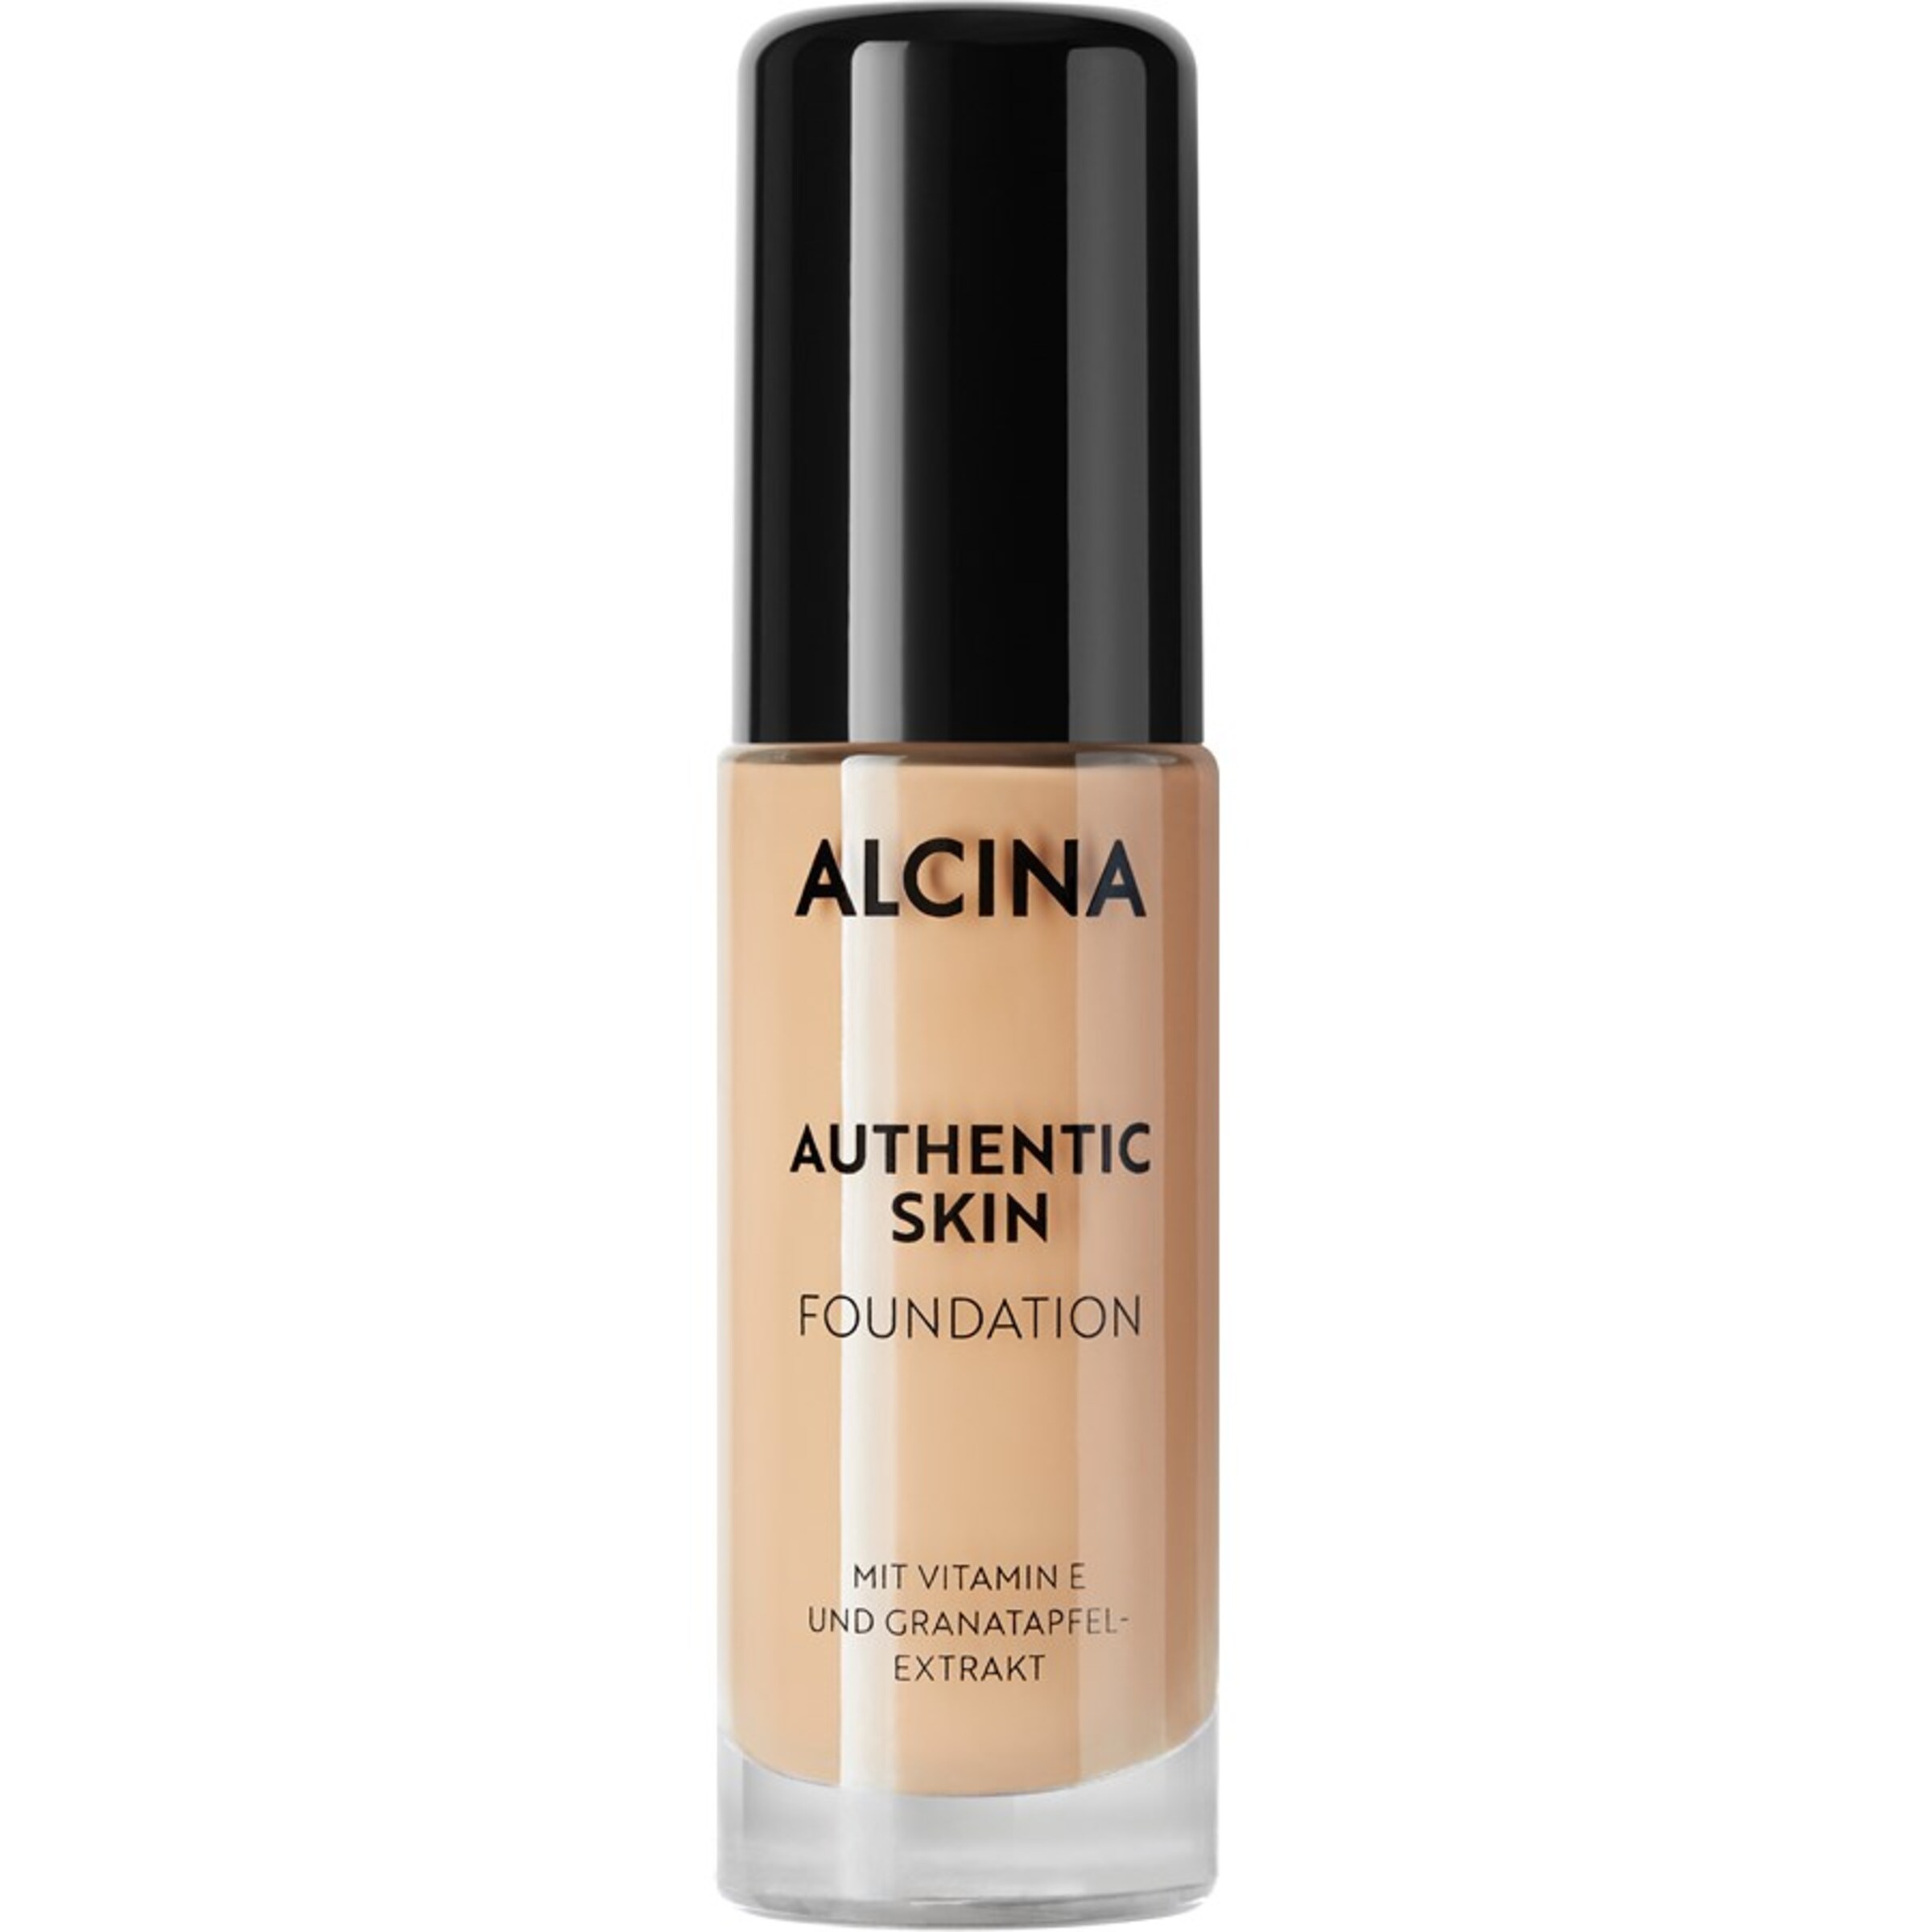 Alcina Foundation Authentic Skin in Beige 